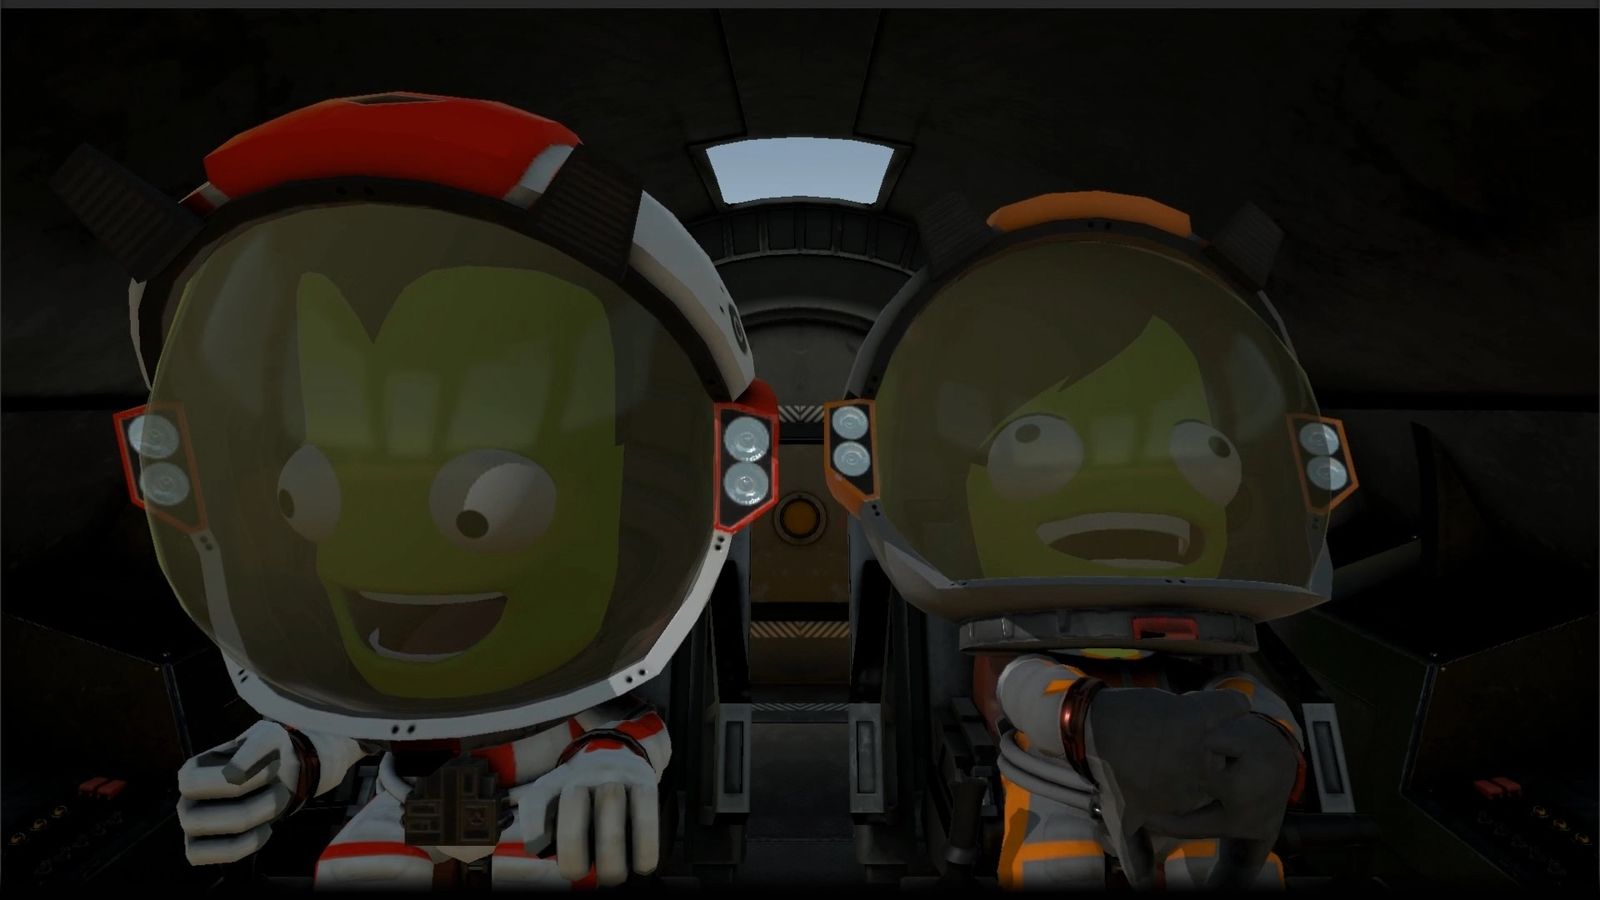 Two kerbal astronauts steering a spaceship